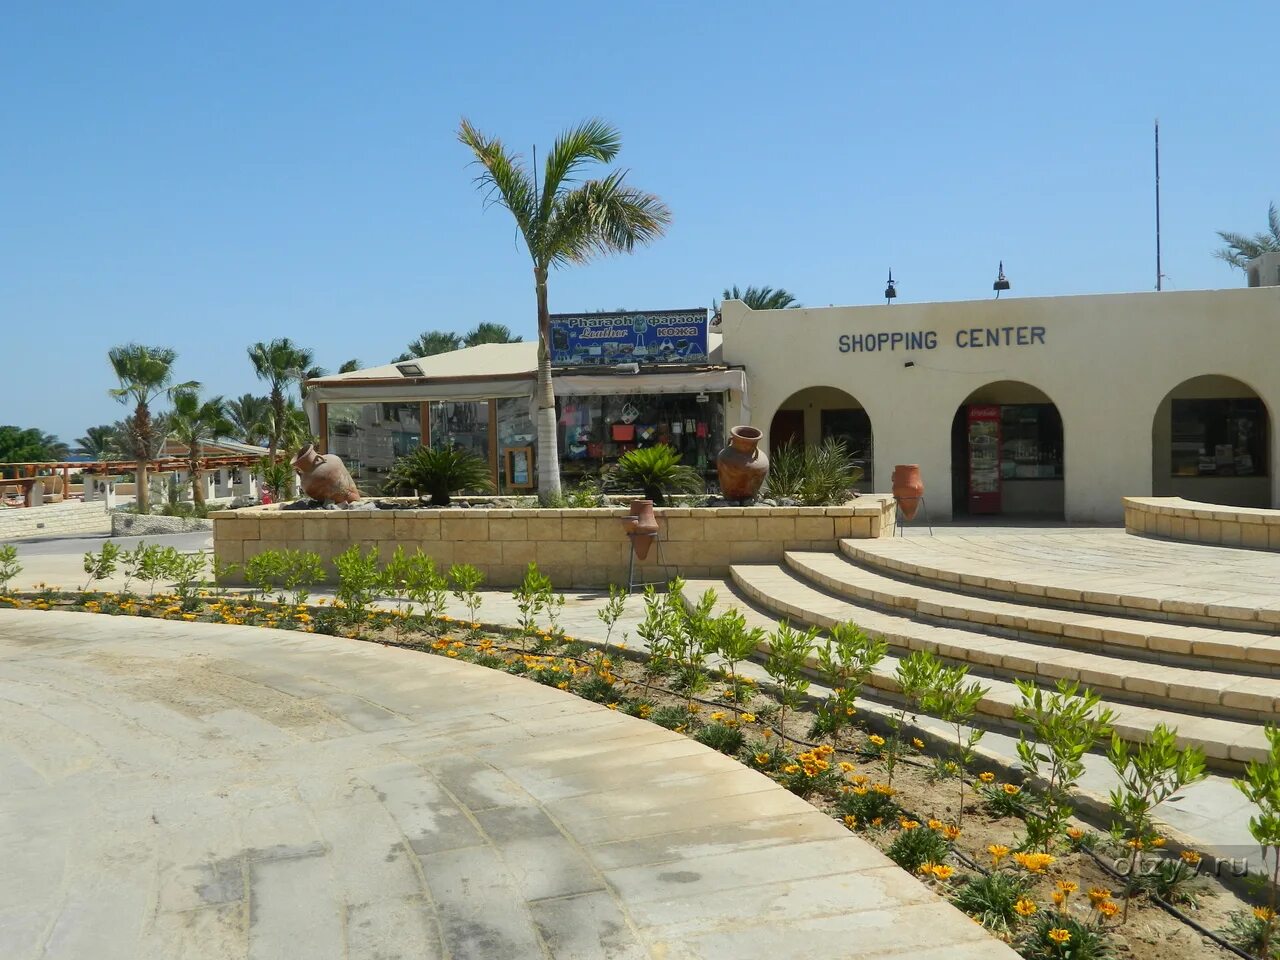 Coral beach rotana 4. Coral Beach Hotel Hurghada Египет Хургада. Отель Корал Бич ротана Резорт Египет Хургада. Coral Beach Rotana Resort 4 Египет Хургада. Ротана Хургада отель Корал Бич.